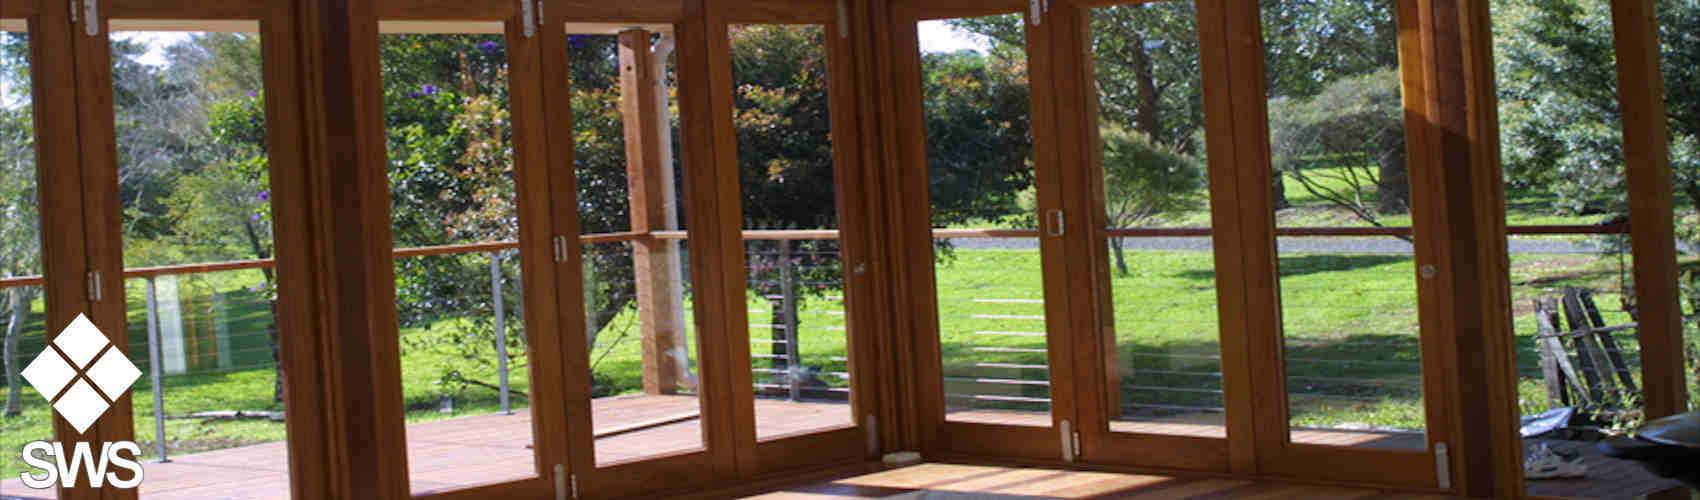 PVC Windows and Doors Northern Ireland